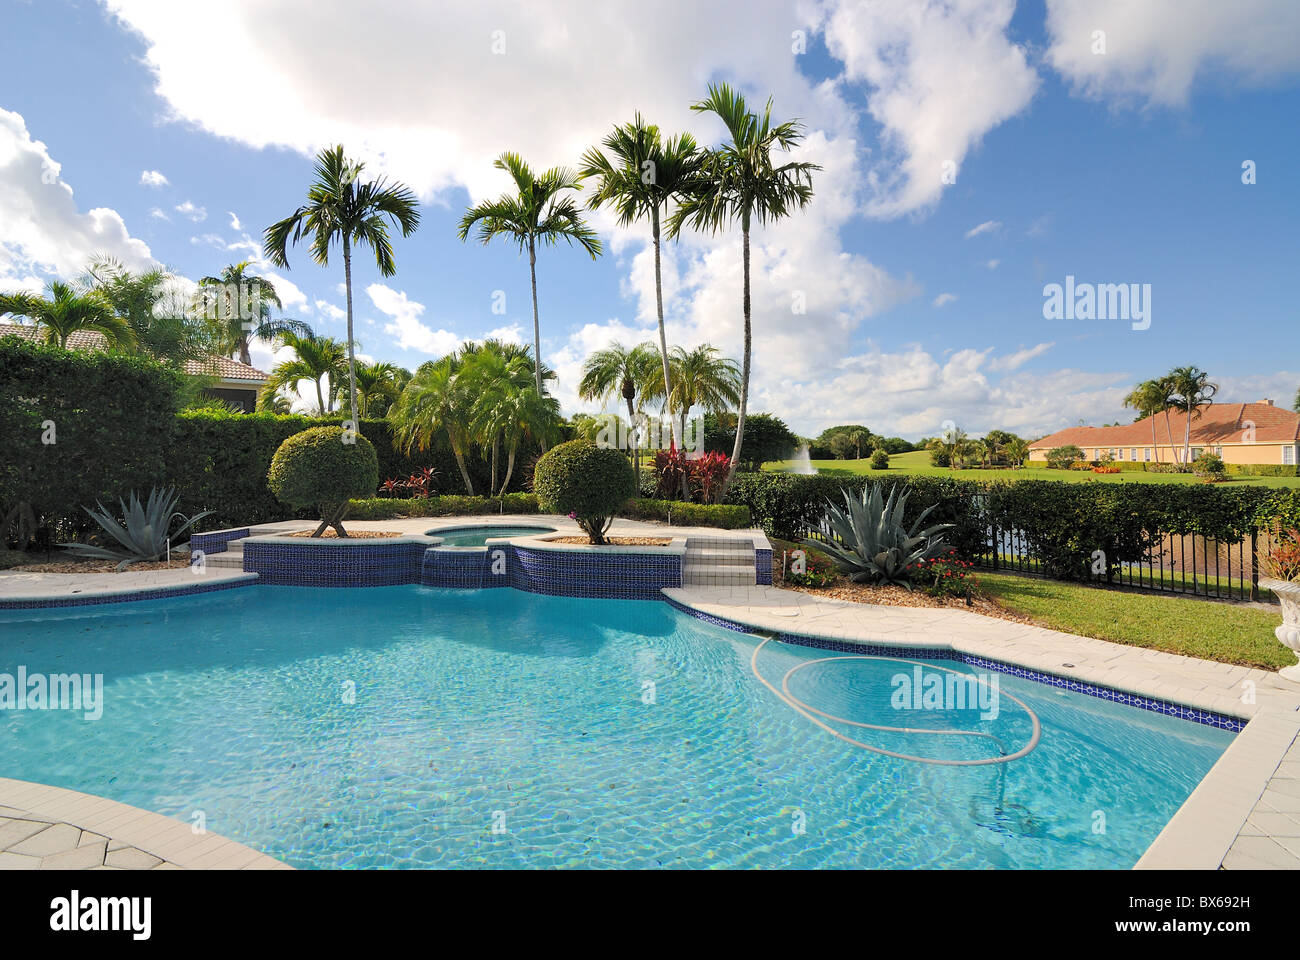 A luxury pool in a neighborhood in Florida. Stock Photo